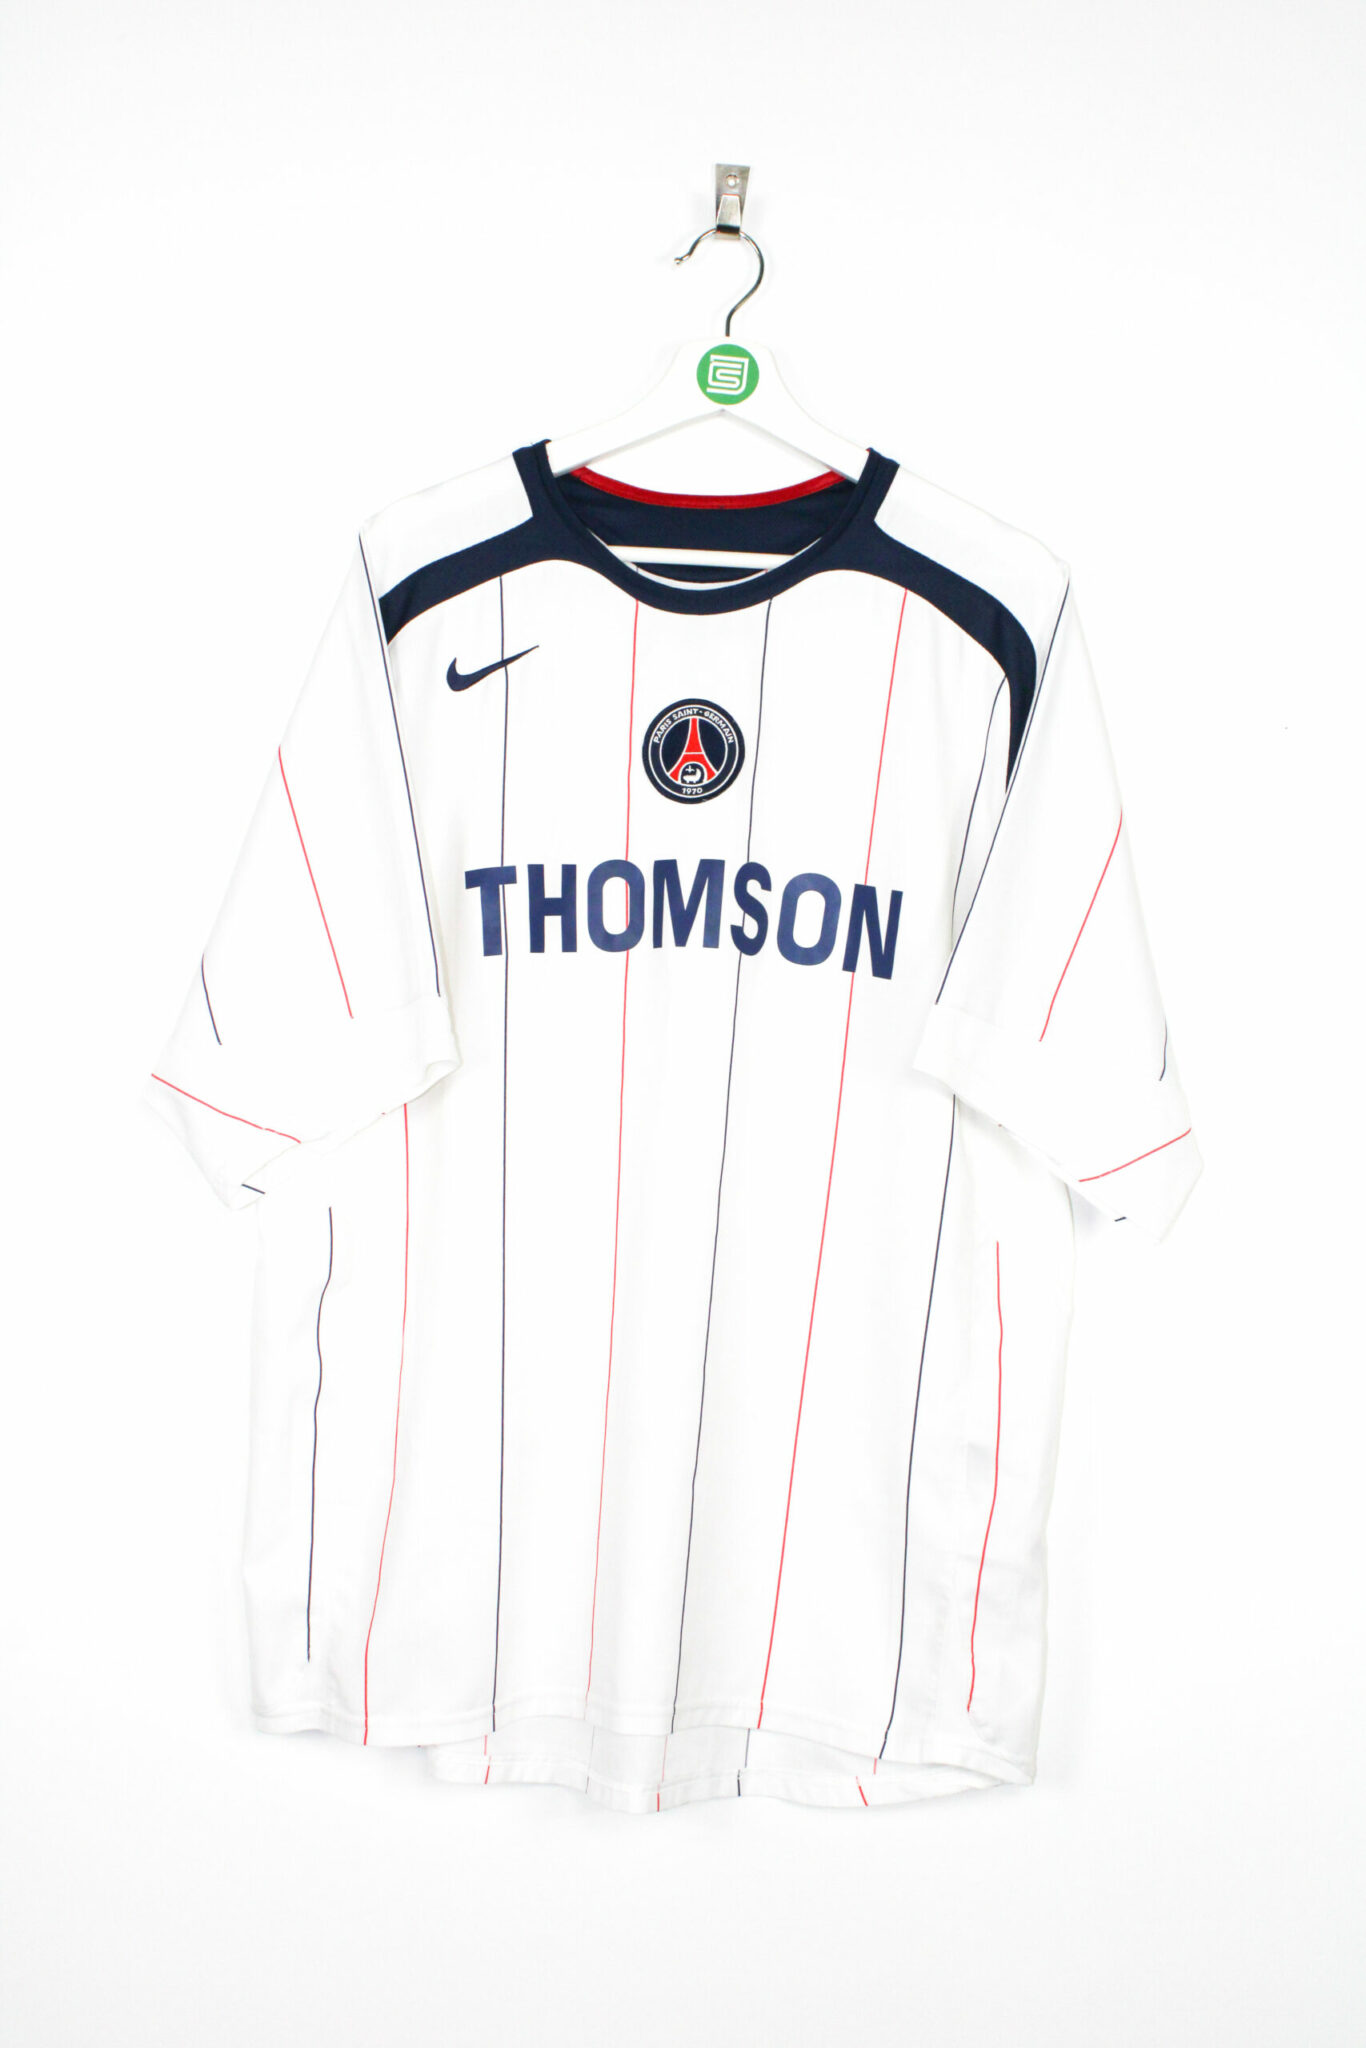 Paris Saint Germain 2006-07 Away Shirt - PSG